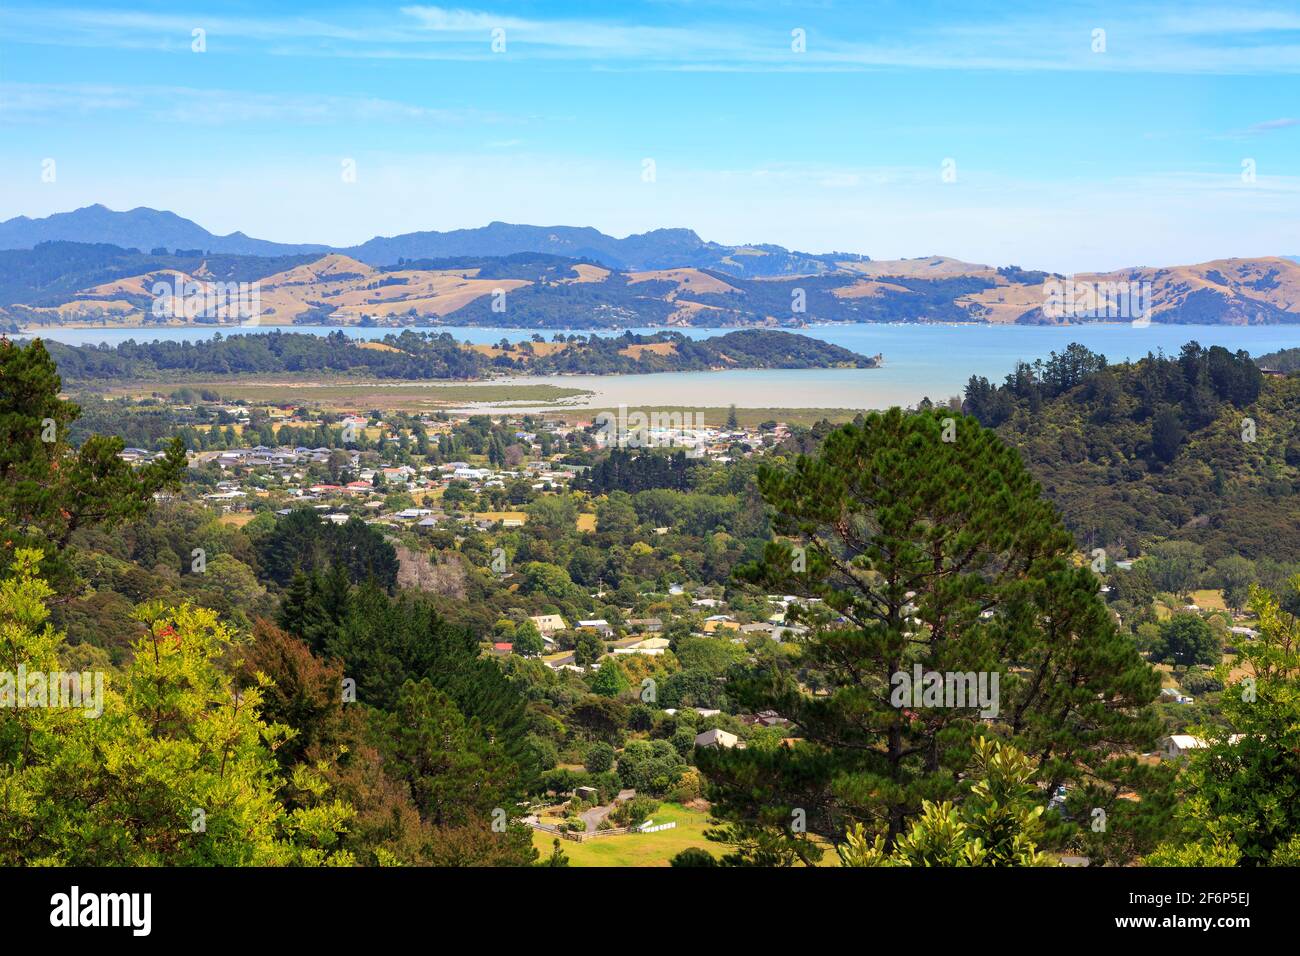 Panoramic view of the small holiday town of Coromandel on the Coromandel Peninsula, New Zealand Stock Photo